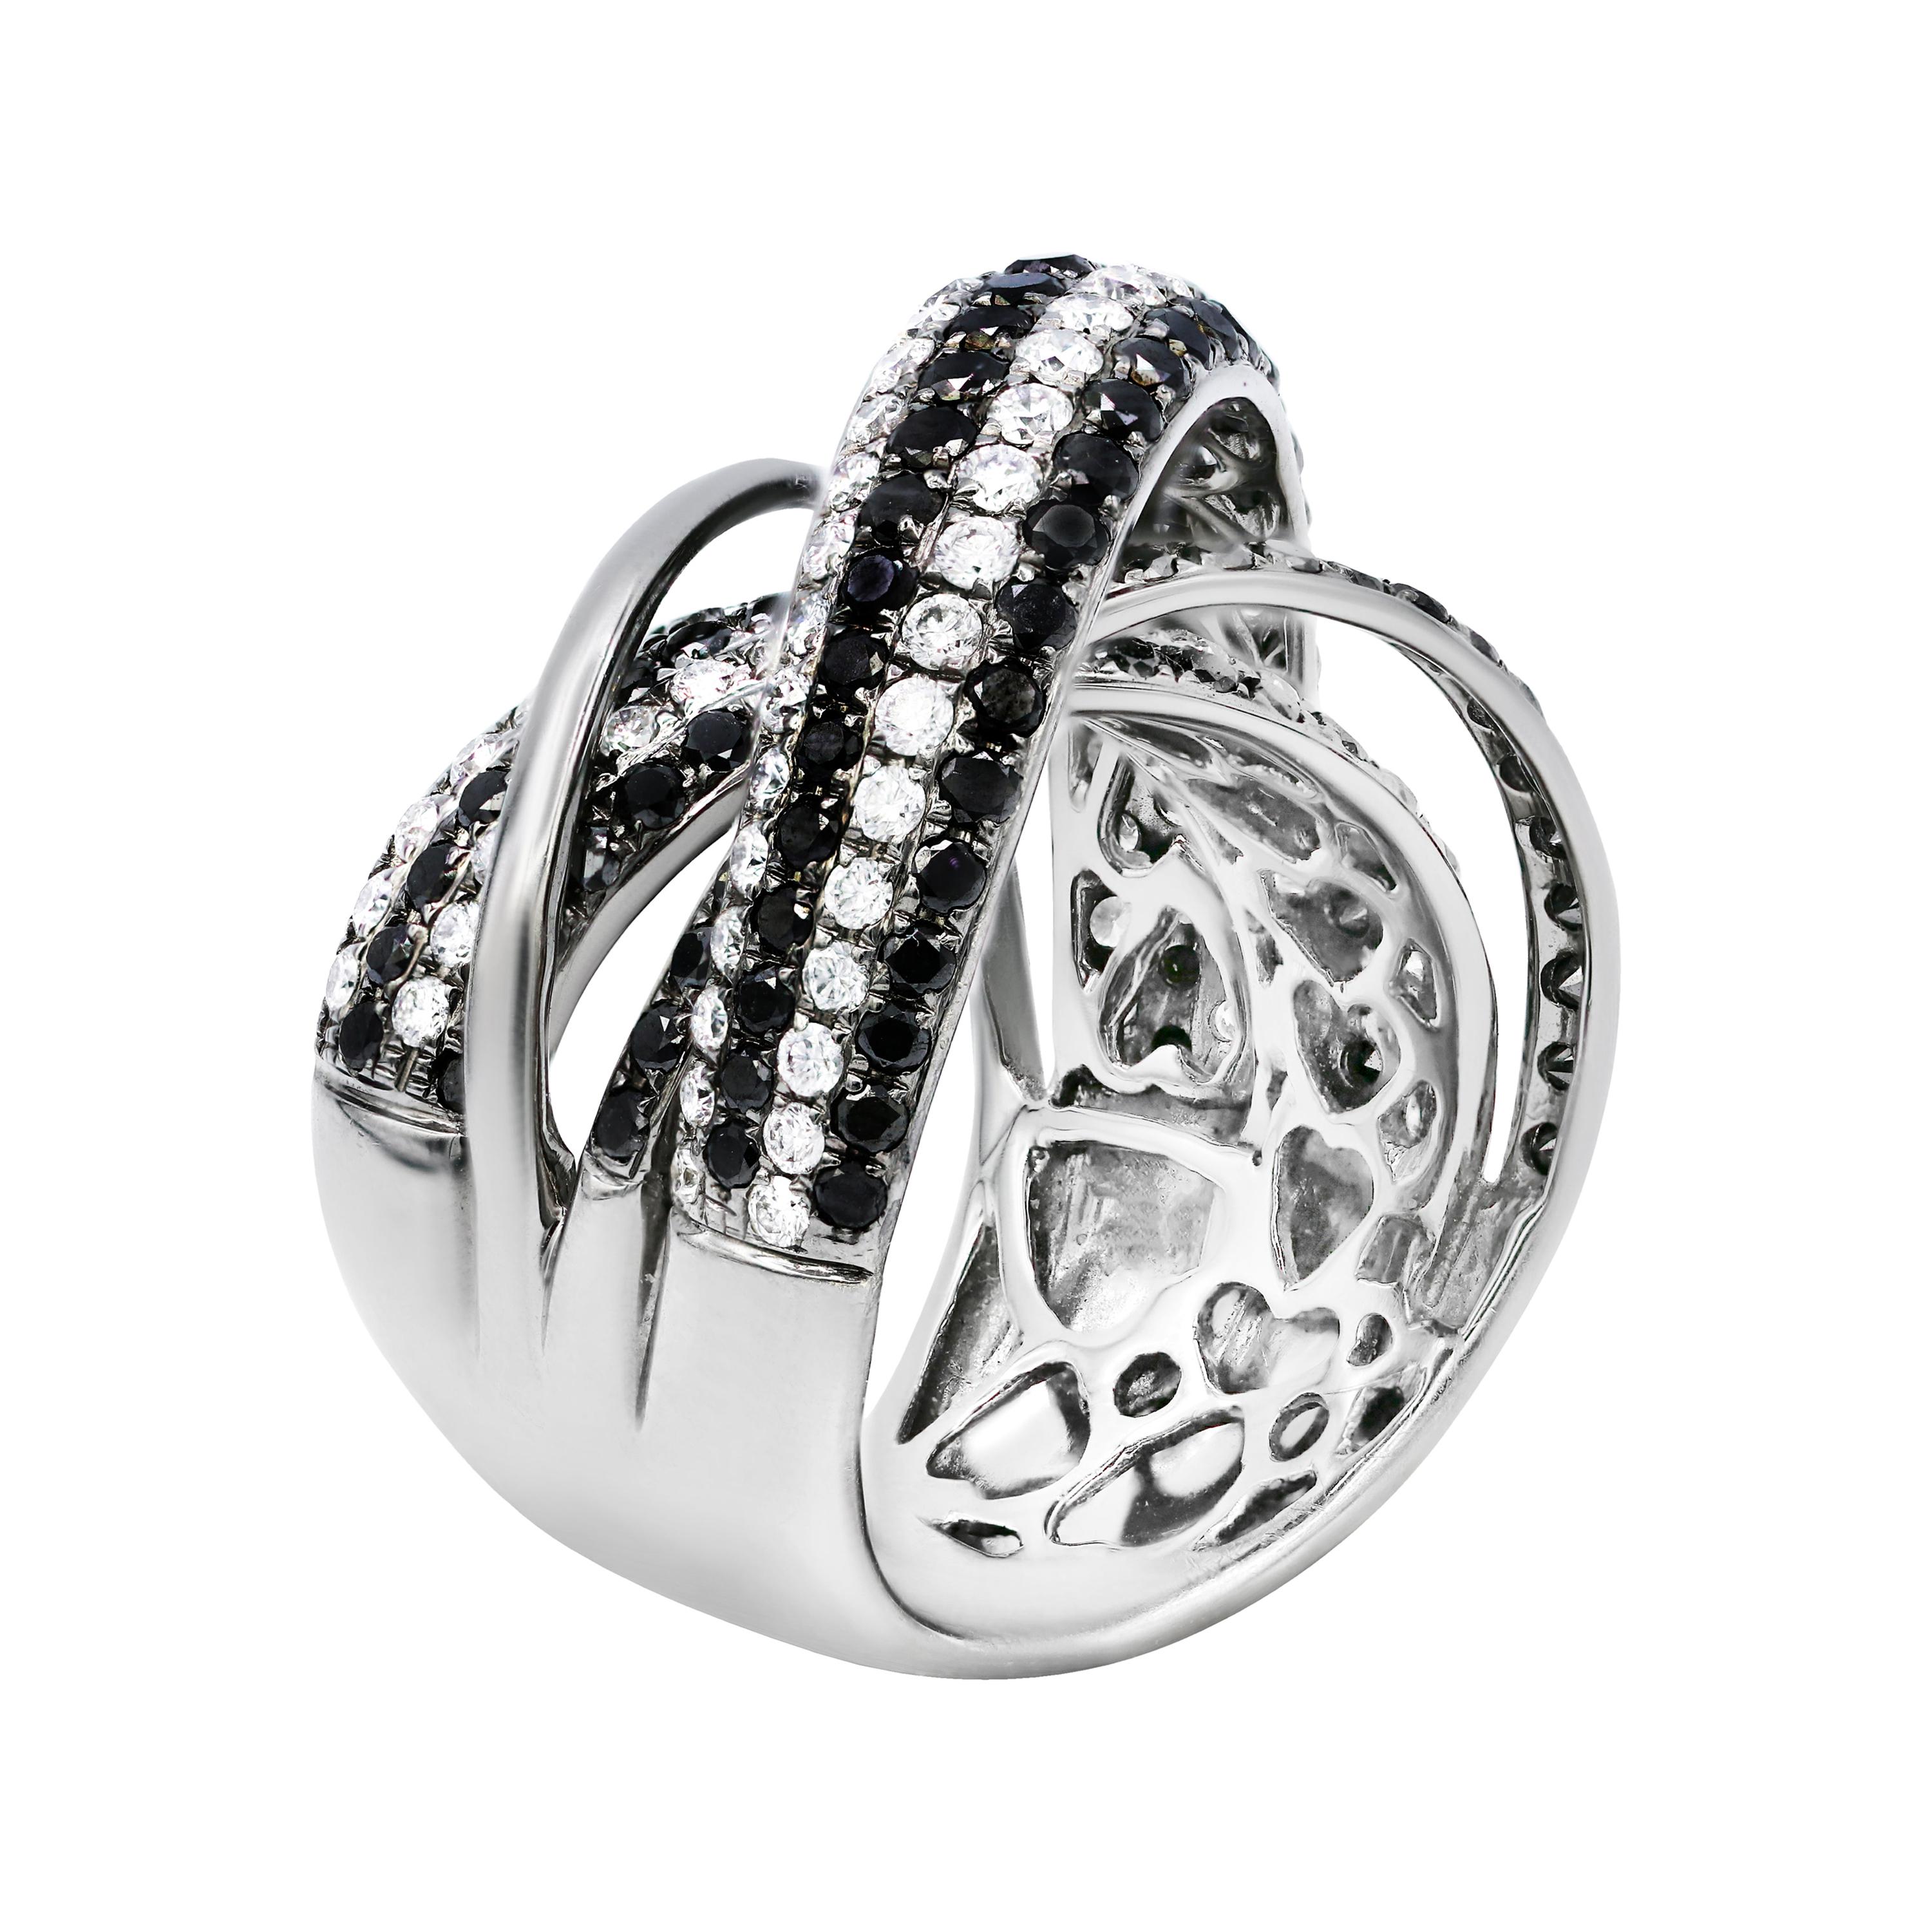 18k white gold rodium plated diamond ring 3.20 carats of black and white diamonds
